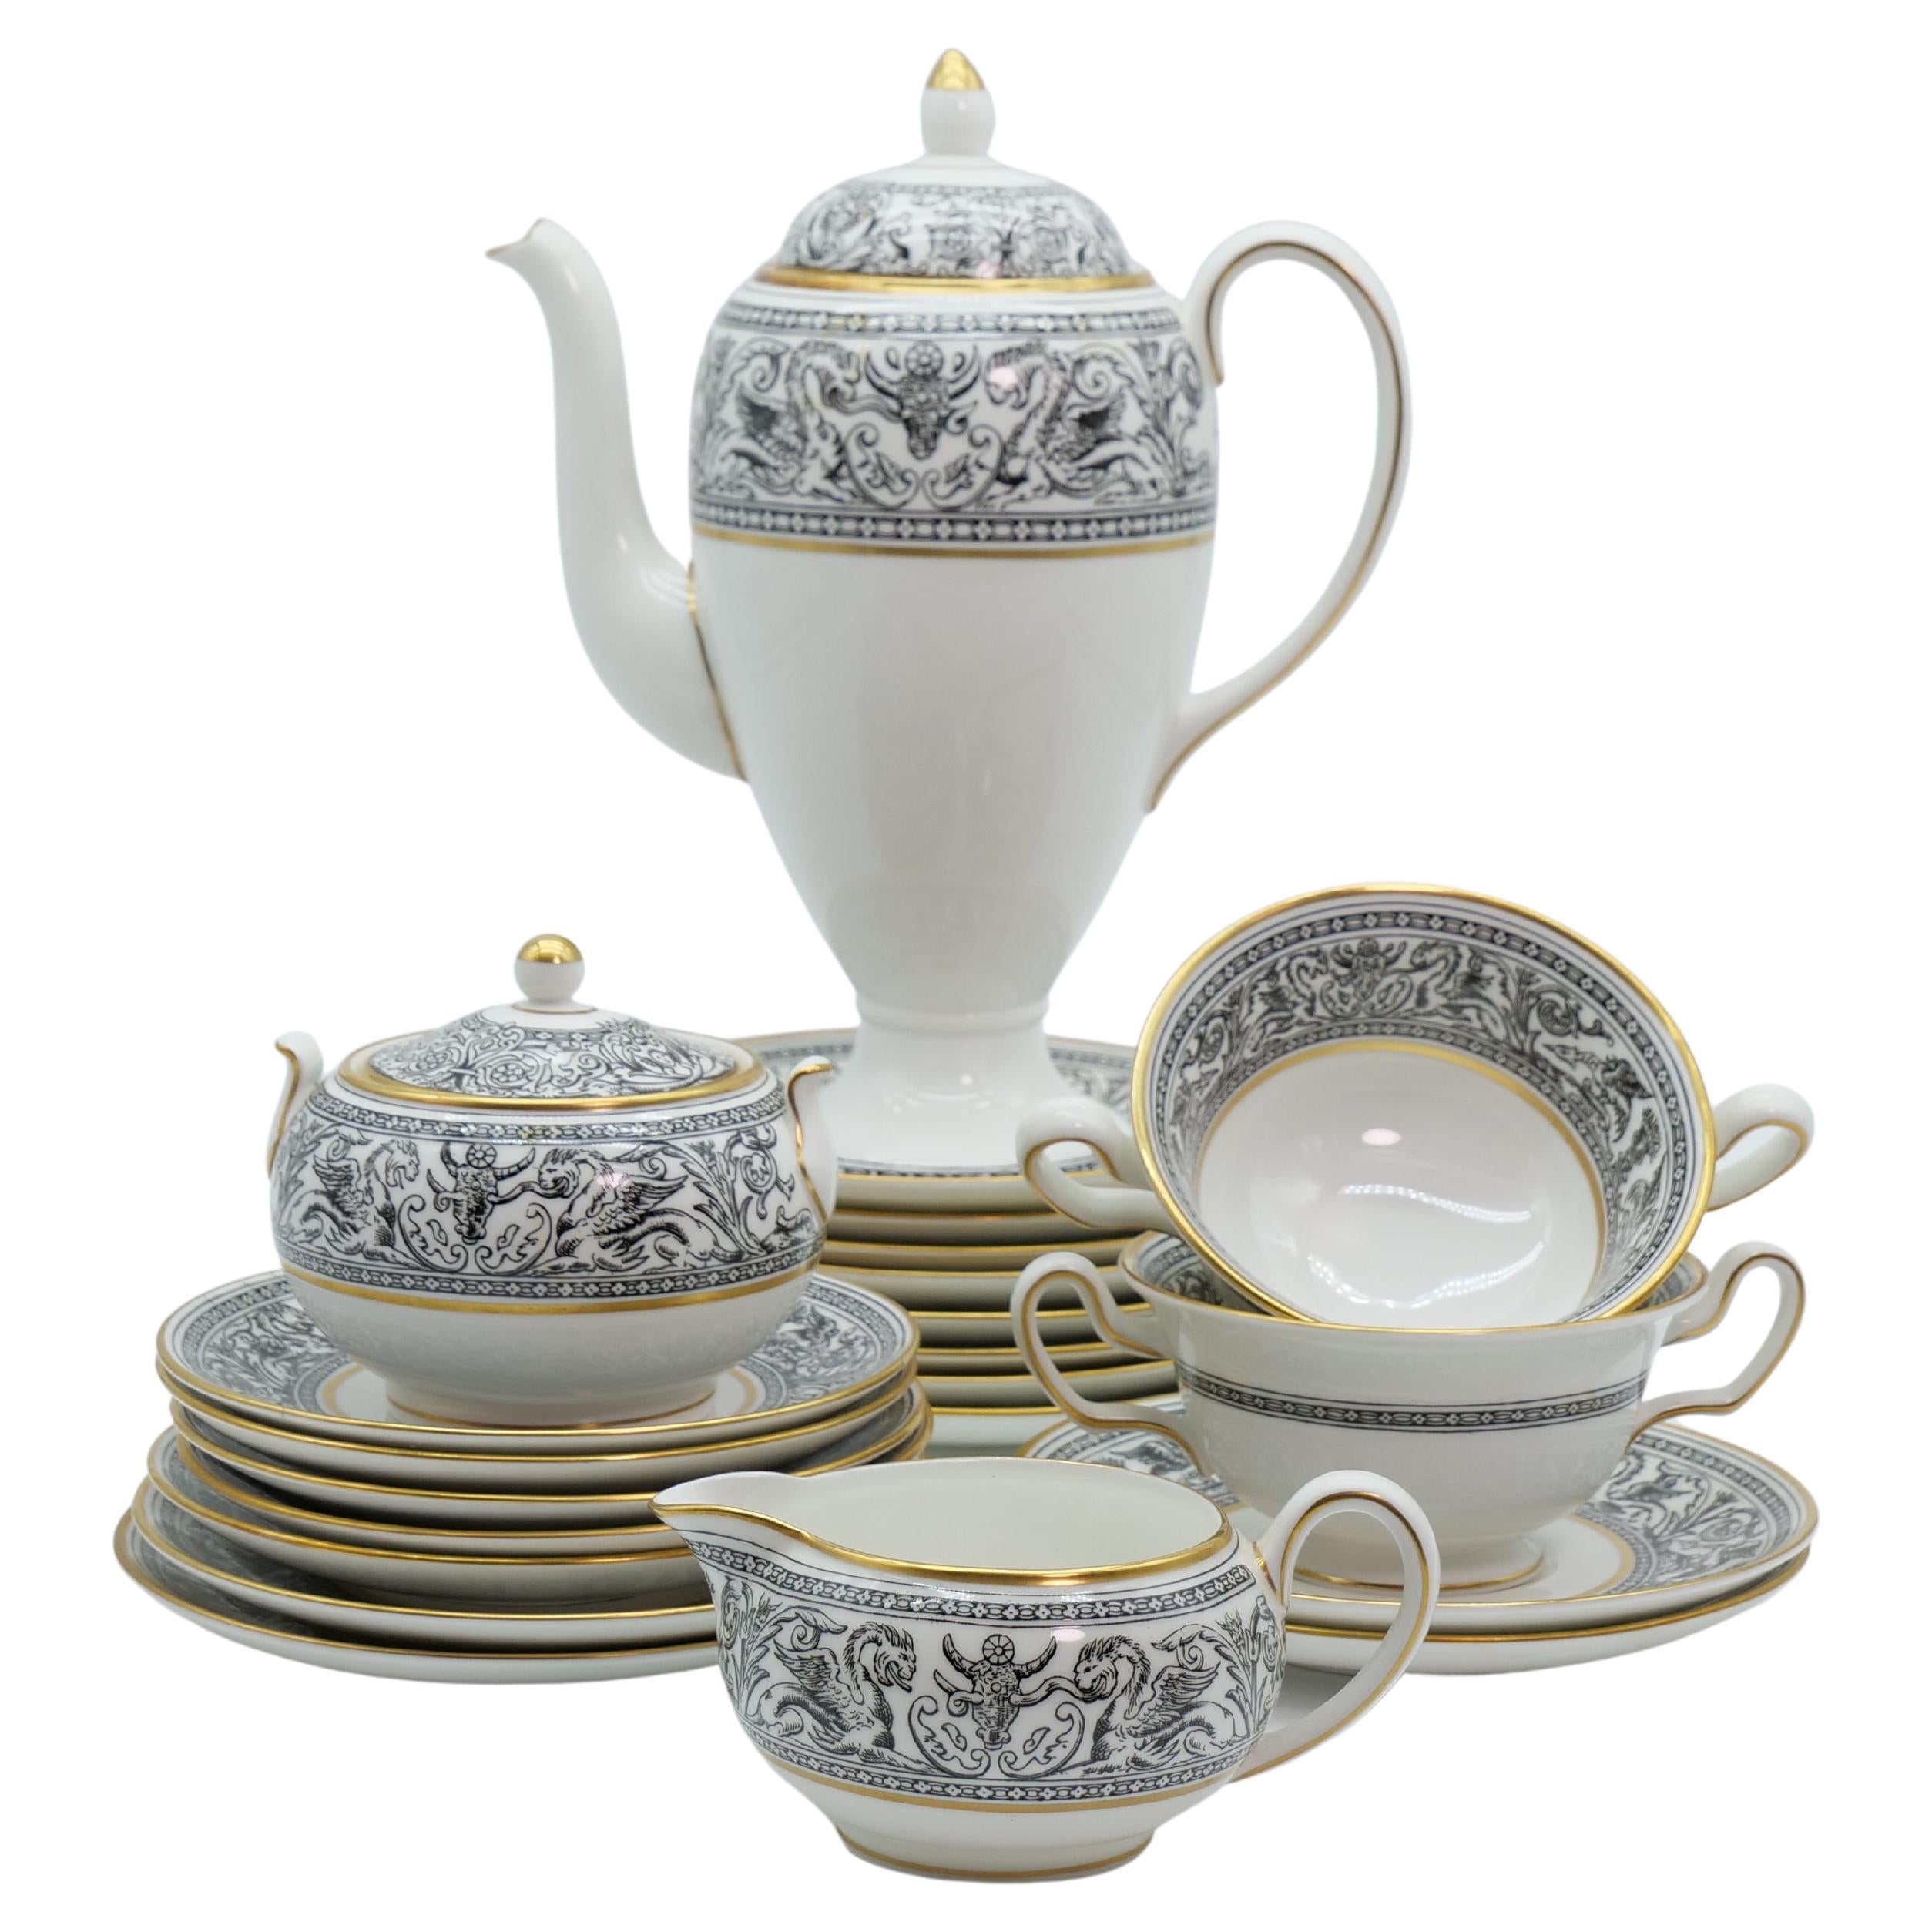 Wedgwood Porcelain Tableware Dinner Service For 12 People For Sale 6